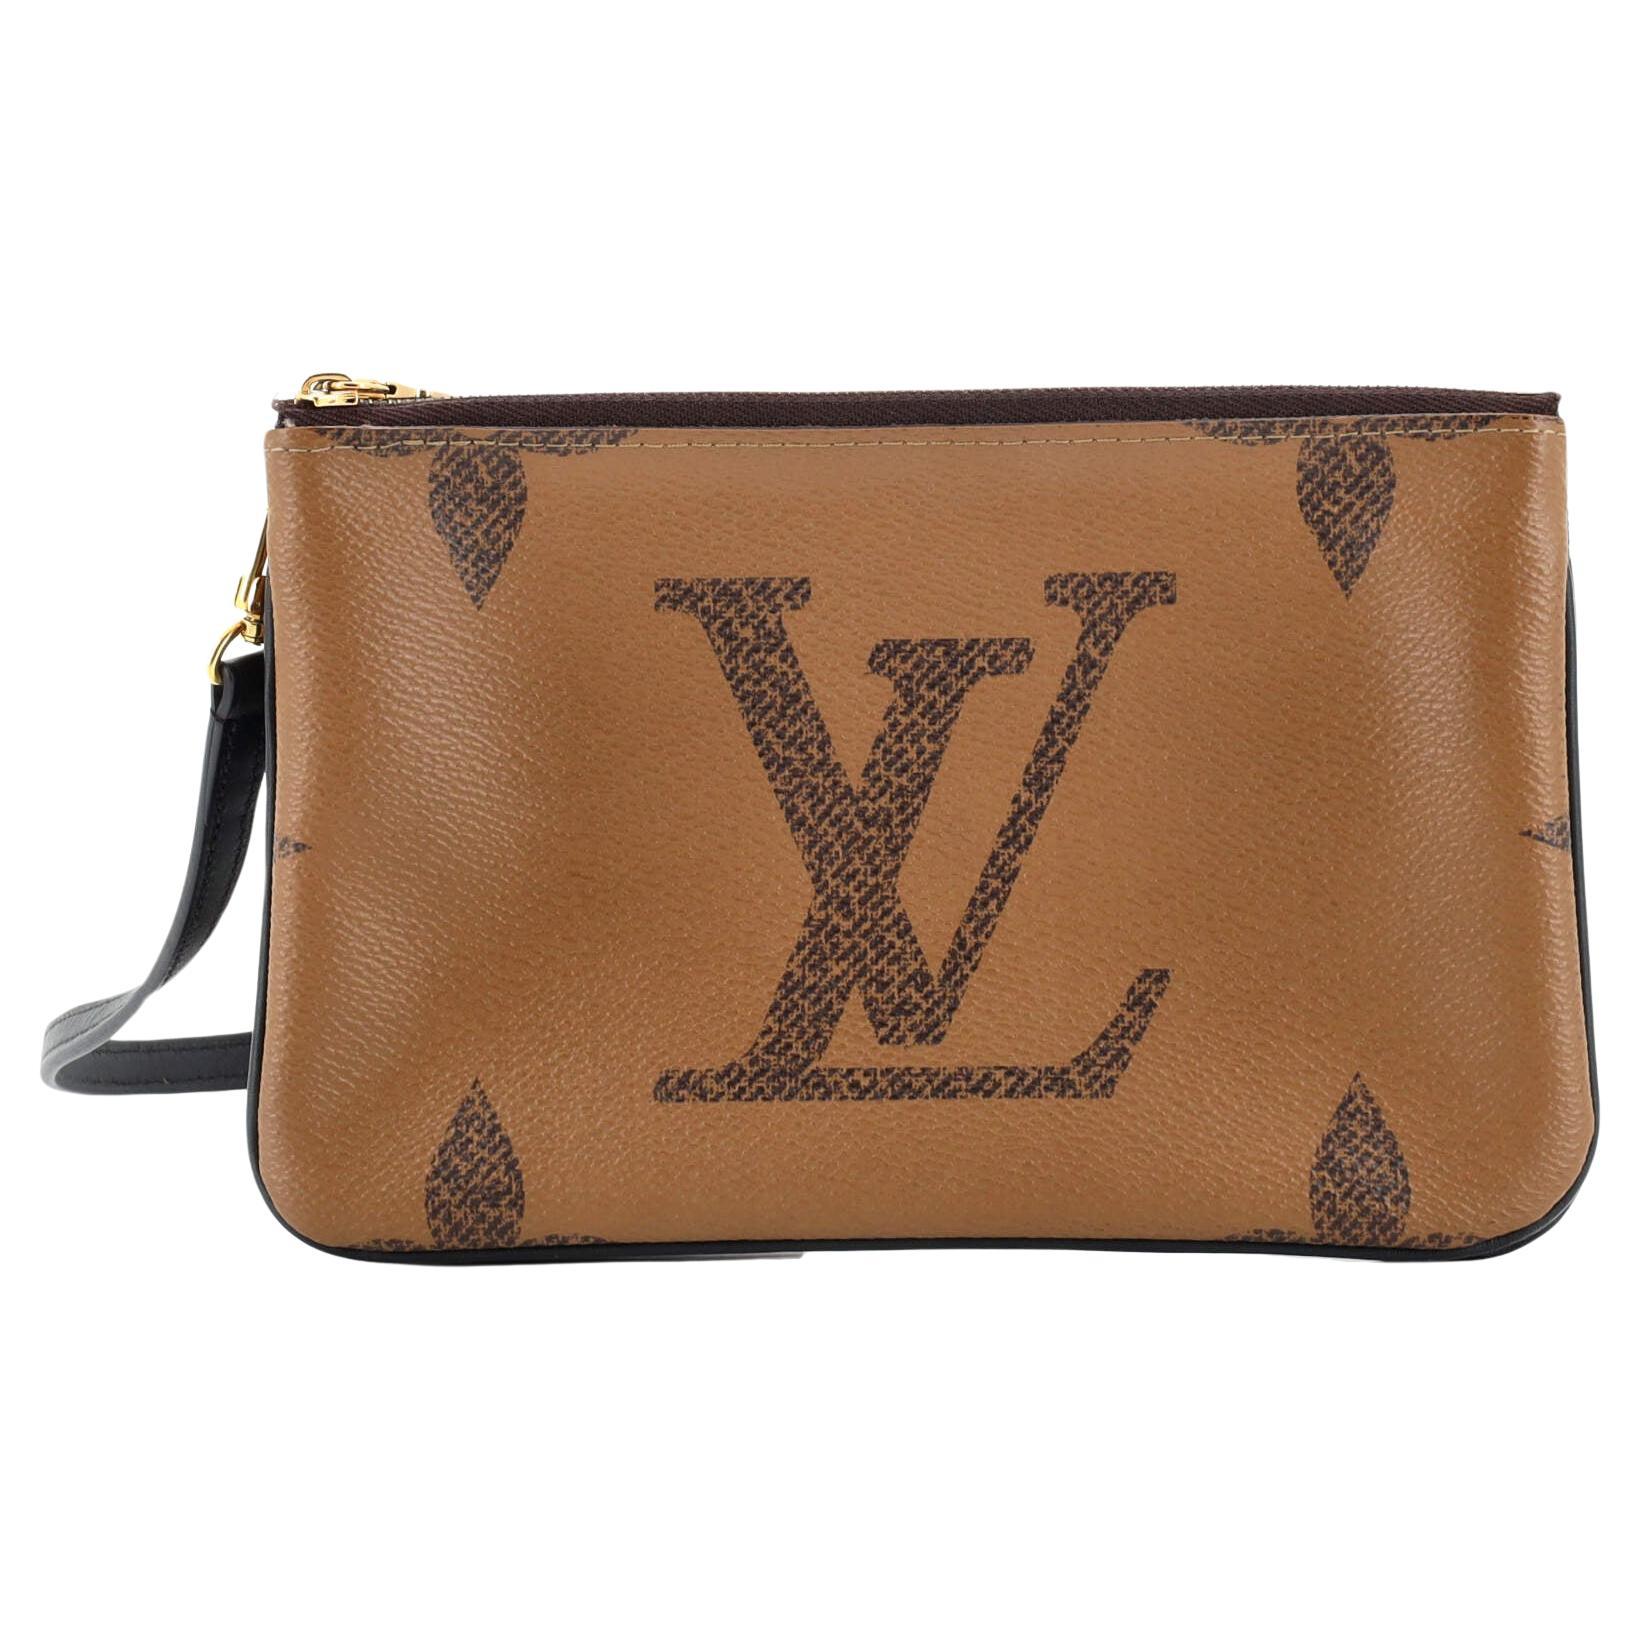 Jessica Simpson's Louis Vuitton Manhattan GM Bag